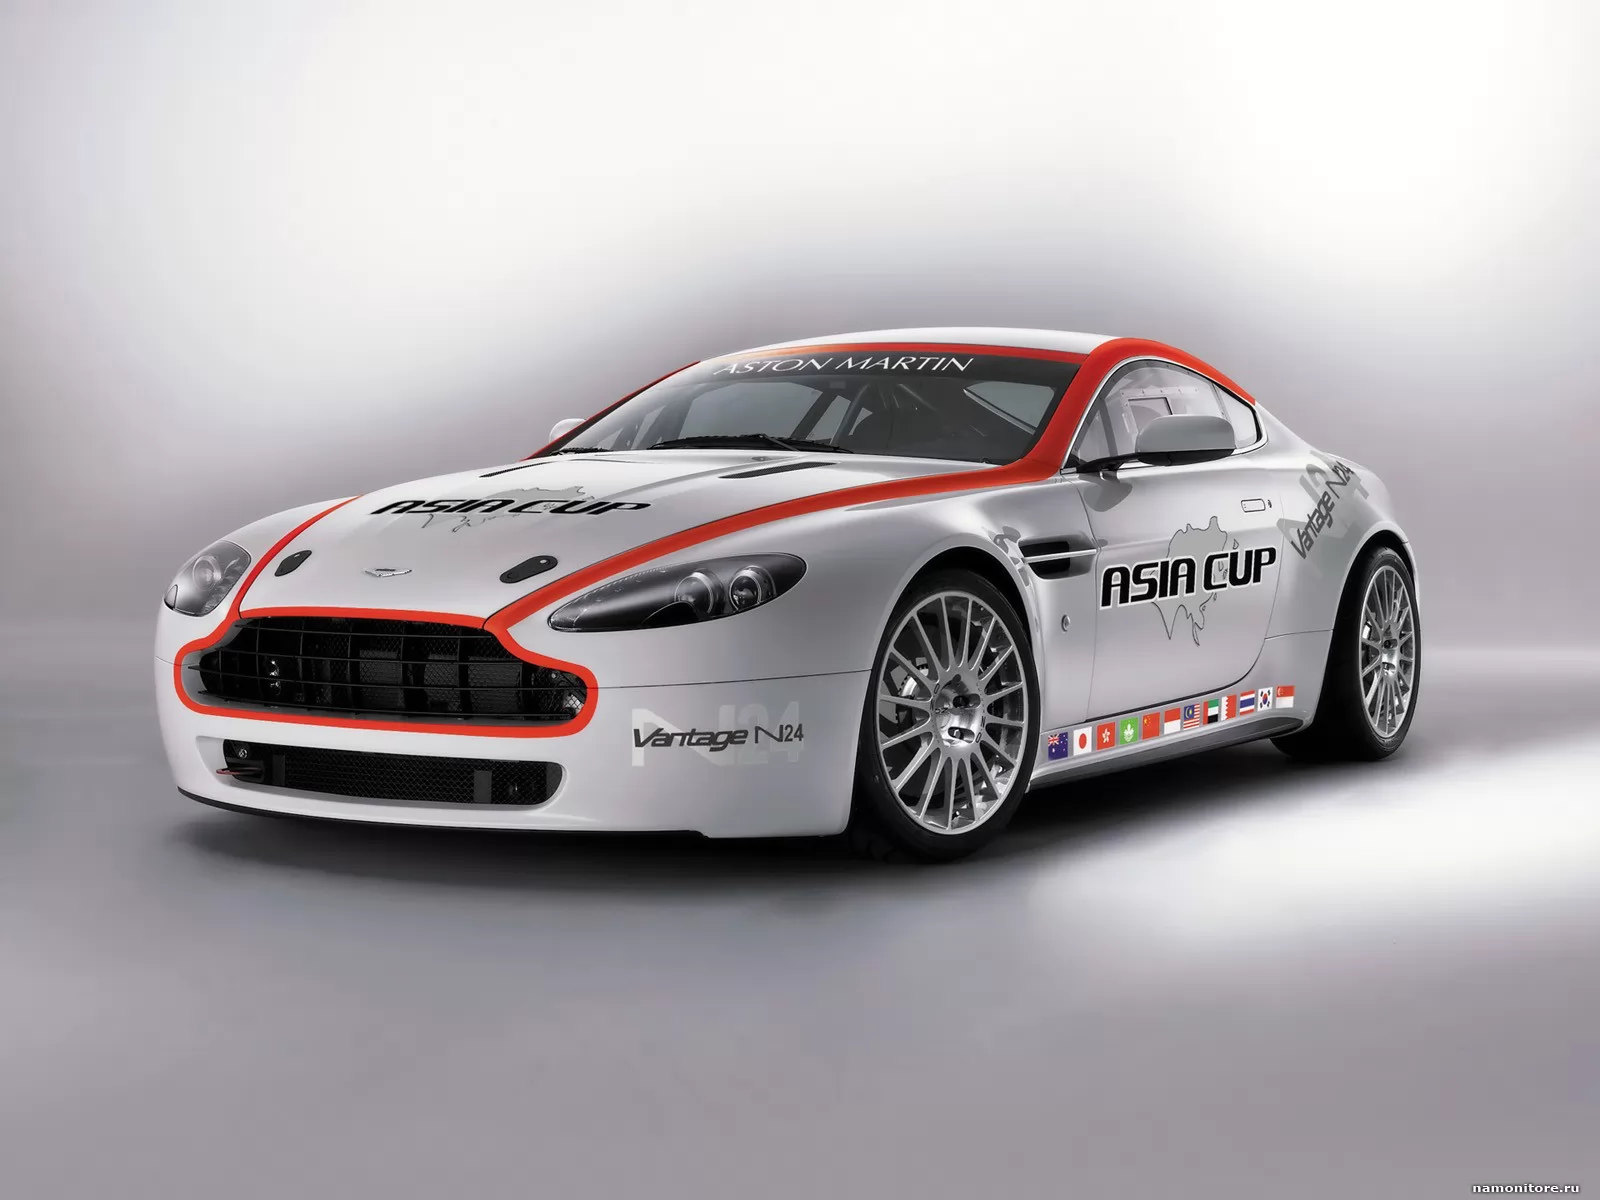 Aston Martin Vantage N24 Asia Cup, Aston Martin, , , , ,  